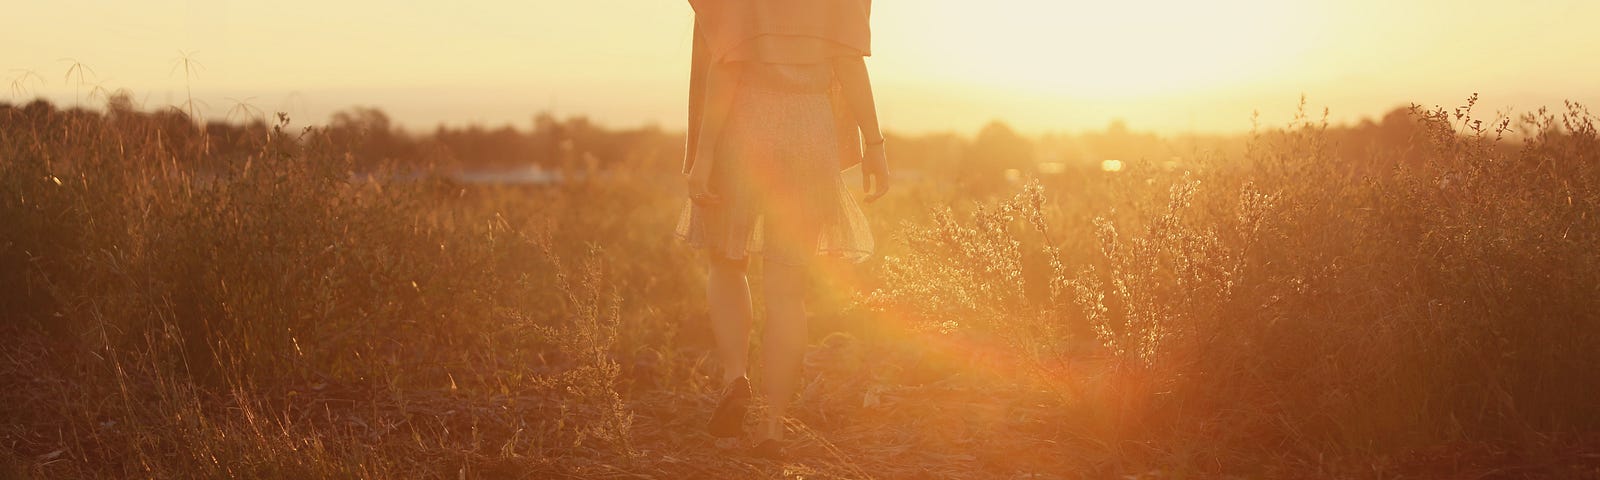 A woman wearing a hat, walking through a sunny field